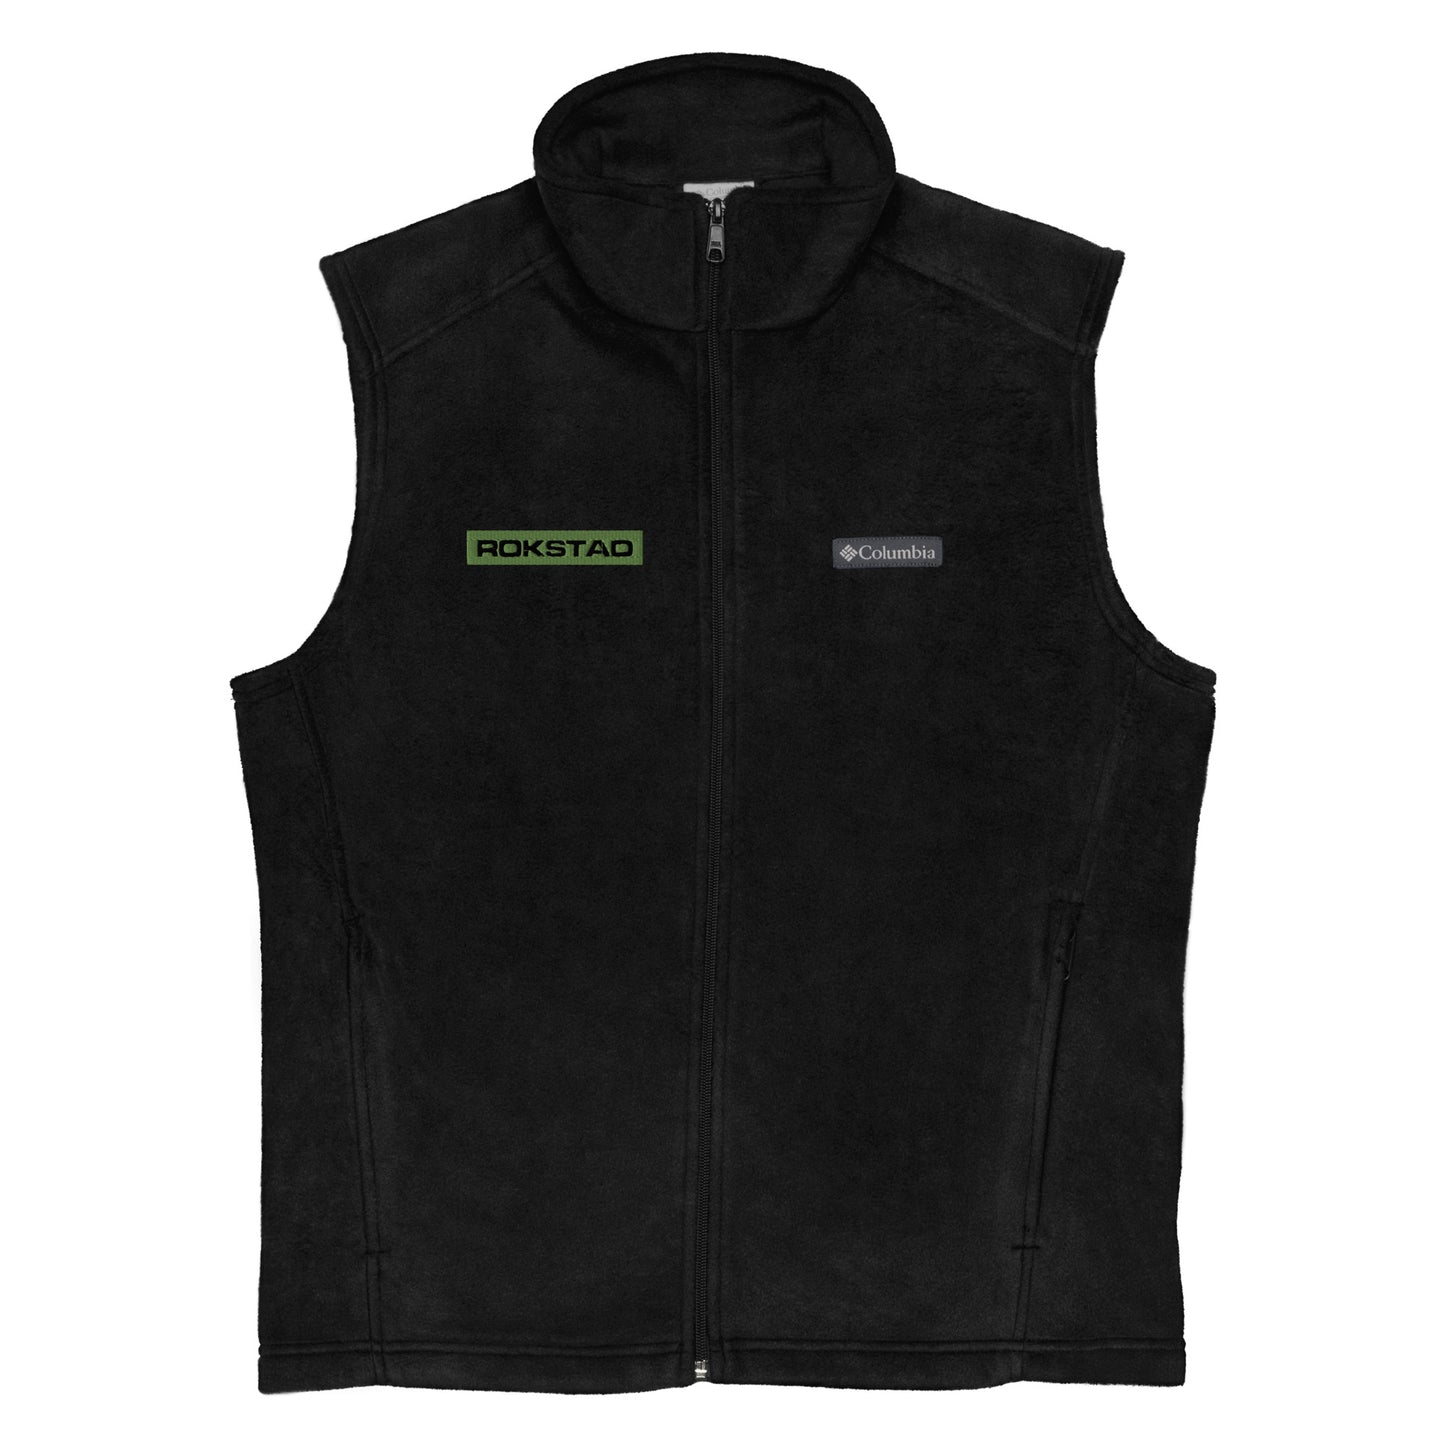 Rokstad - Columbia fleece vest